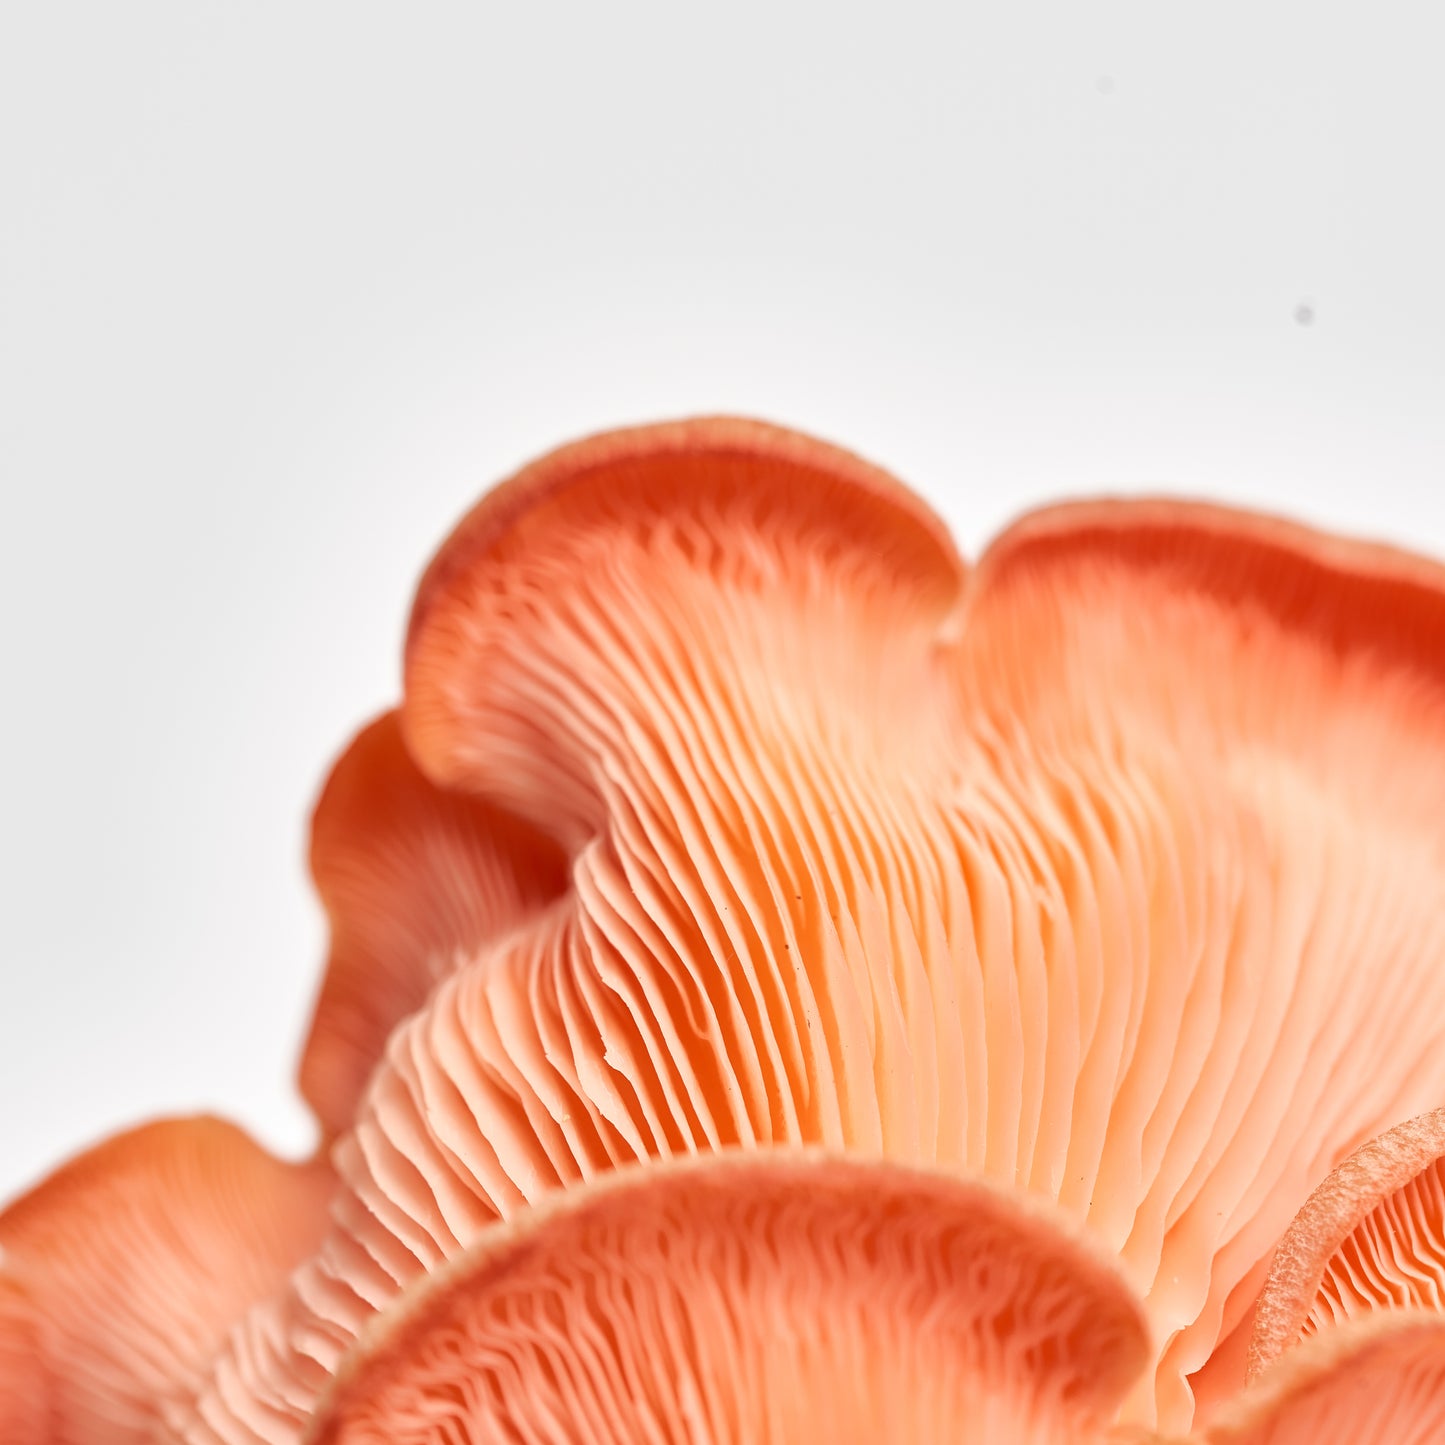 Mushroom Growing Kit - Pink Oyster - Gift Option